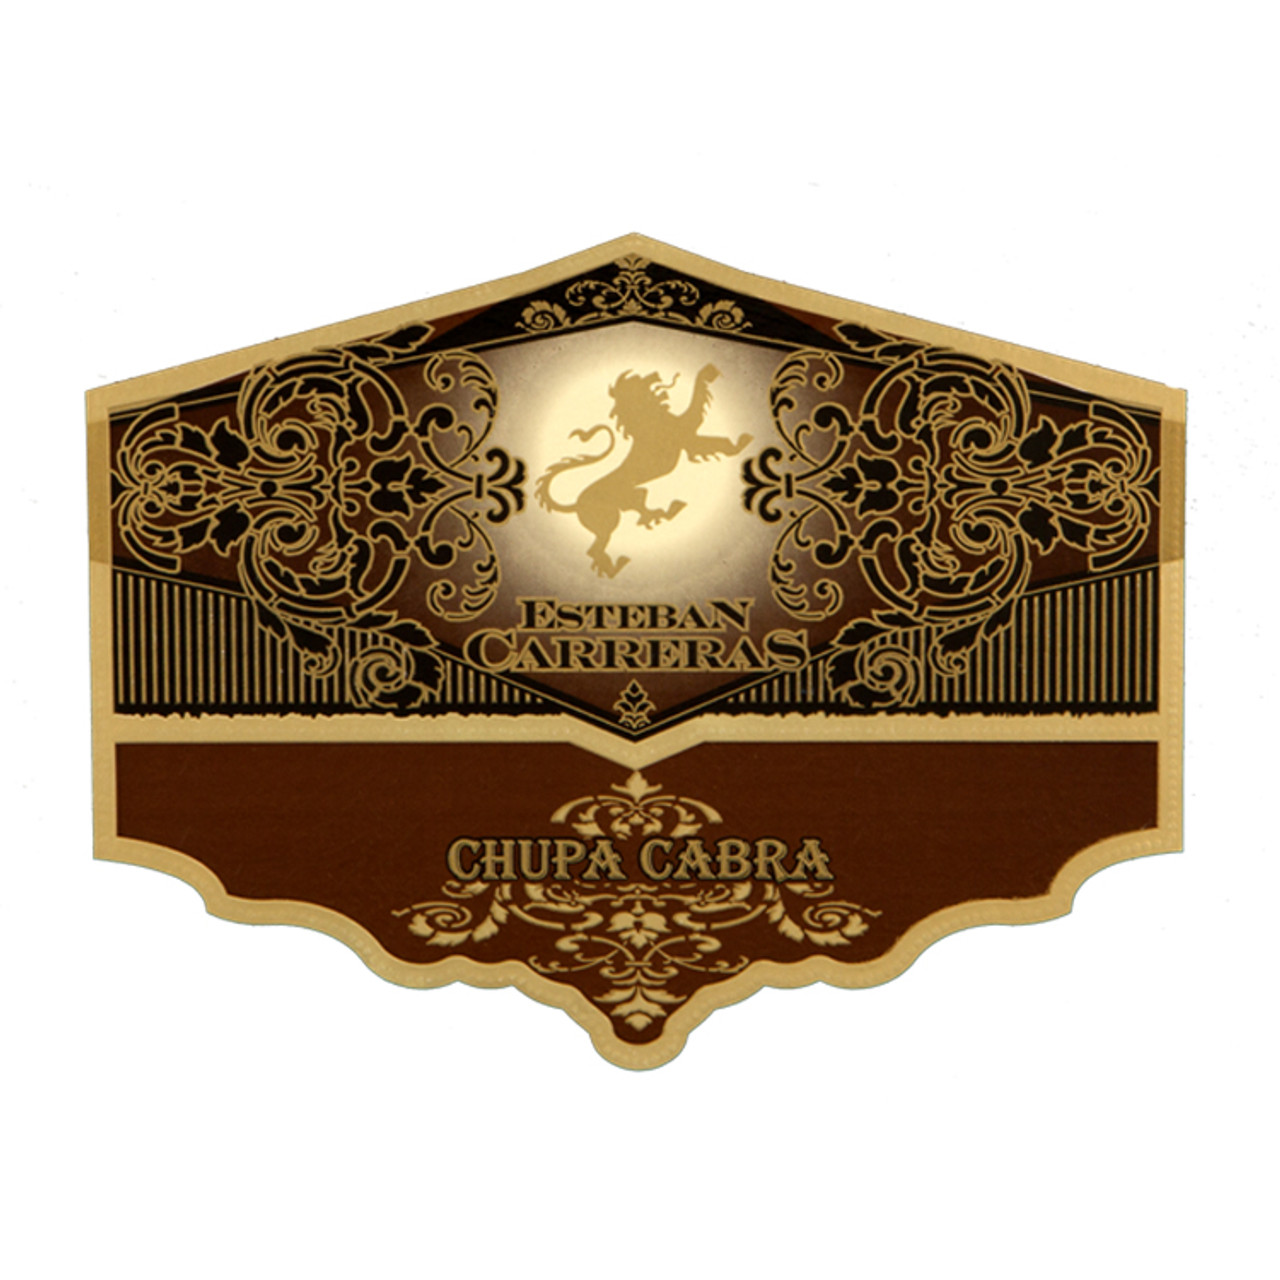 Esteban Carreras Chupacabra Siglo Cigars - 6 x 54 (Box of 20)